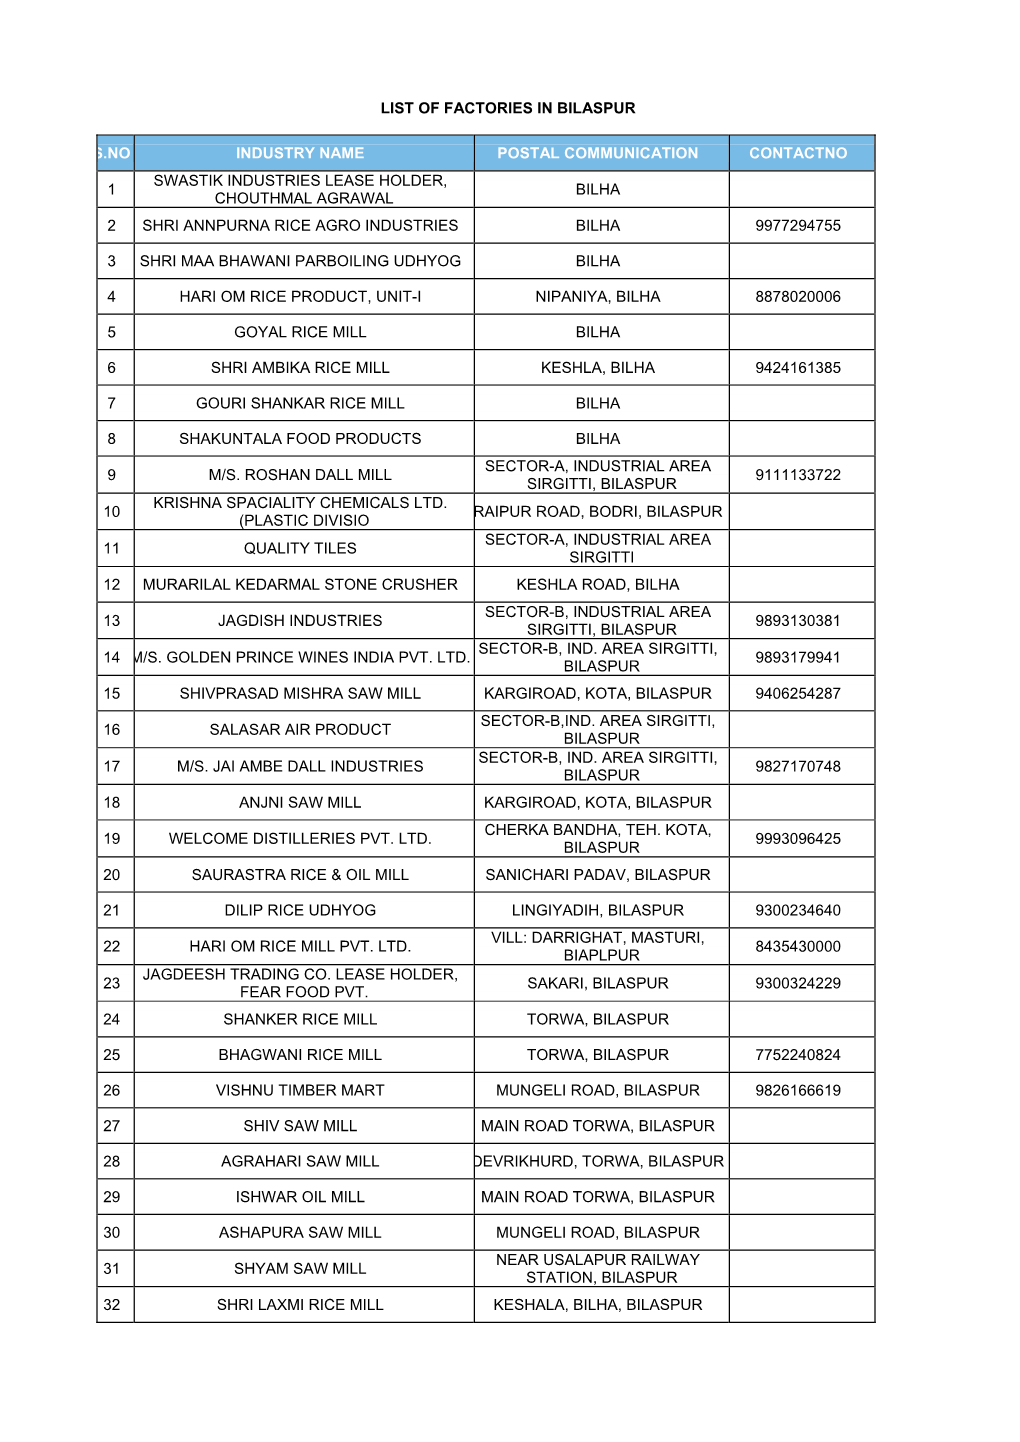 List of Factories in Bilaspur